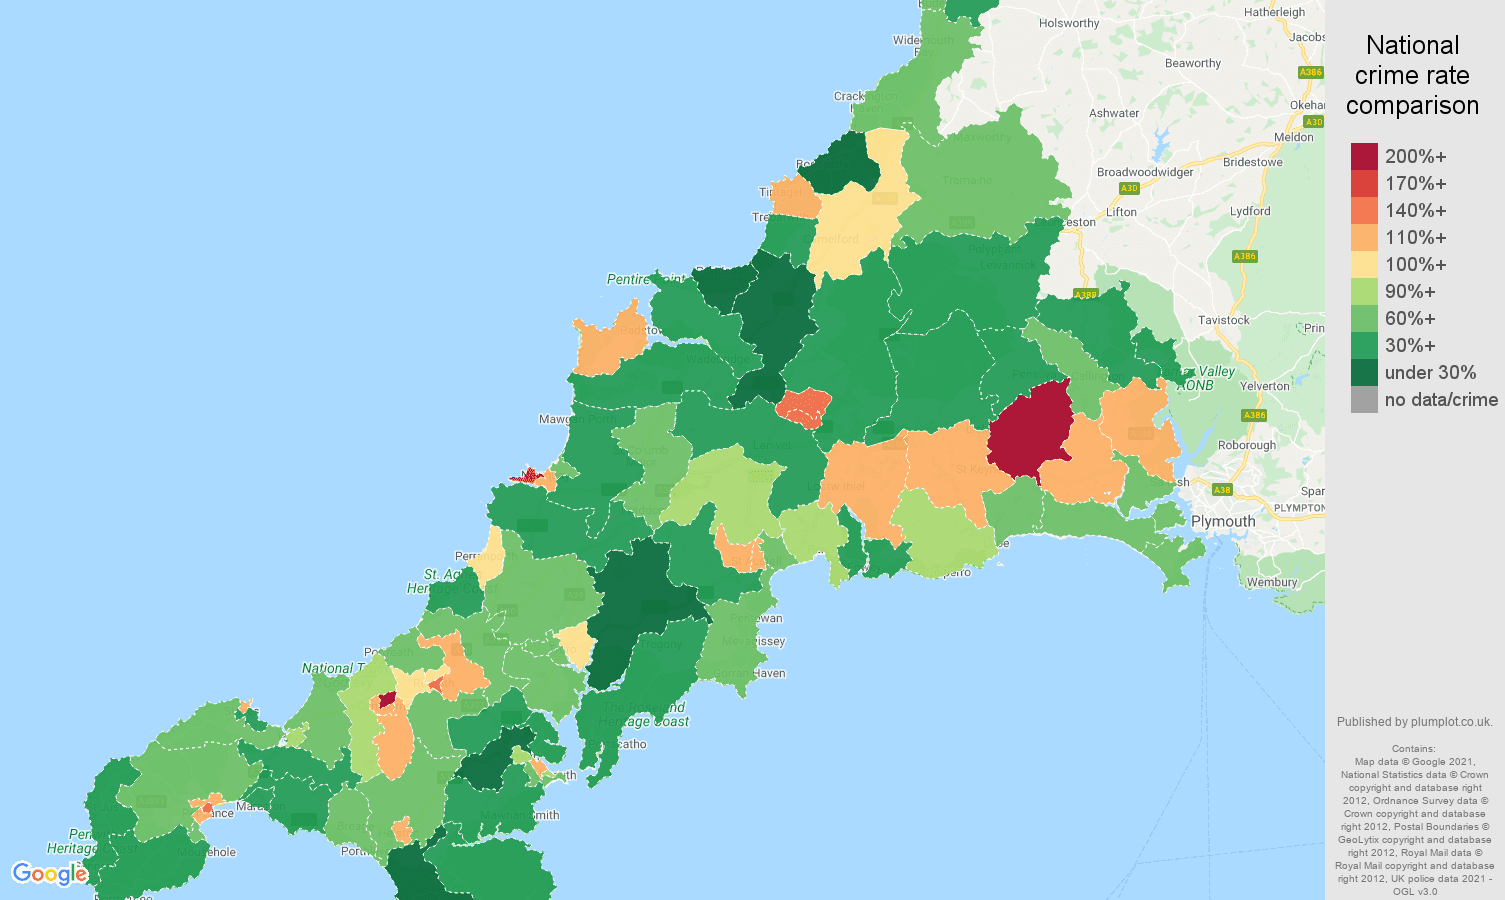 Cornwall criminal damage and arson crime rate comparison map